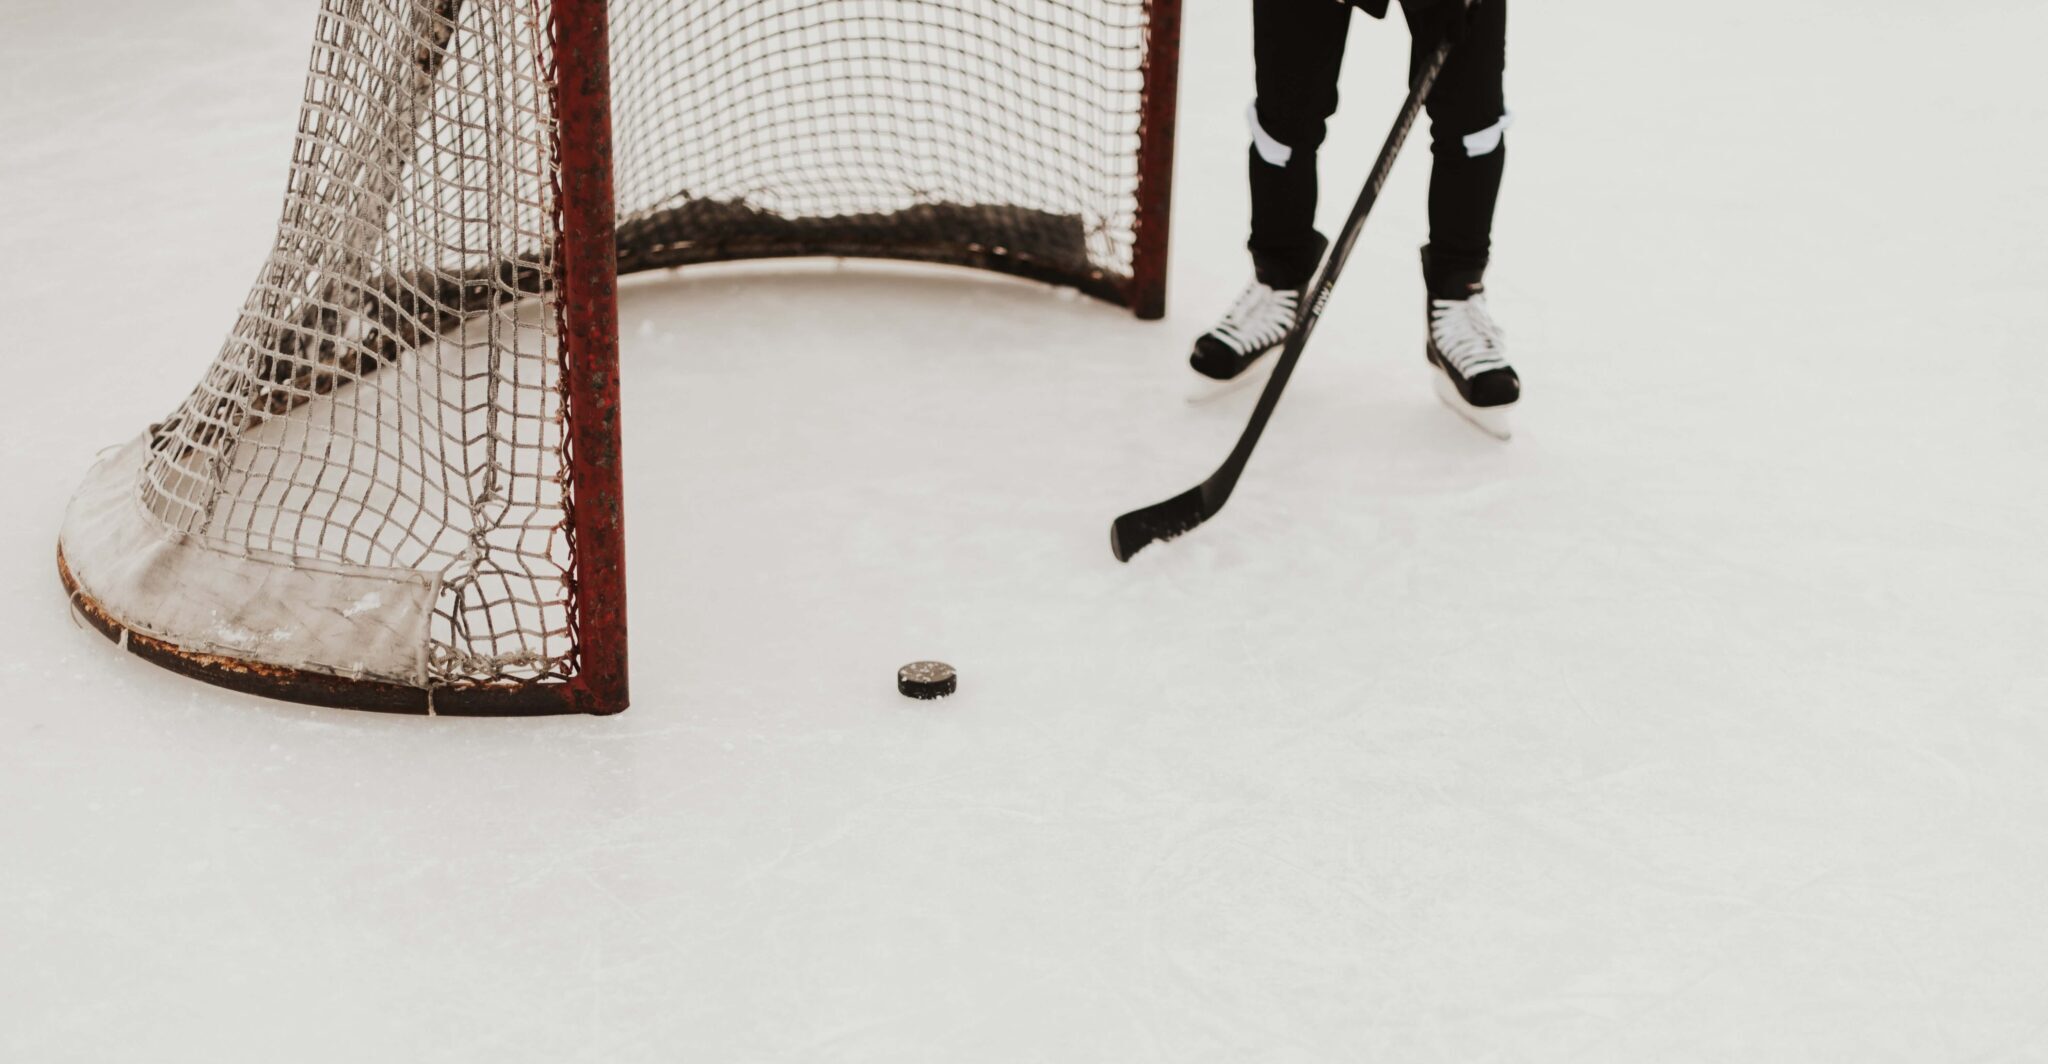 Hockey net and skater